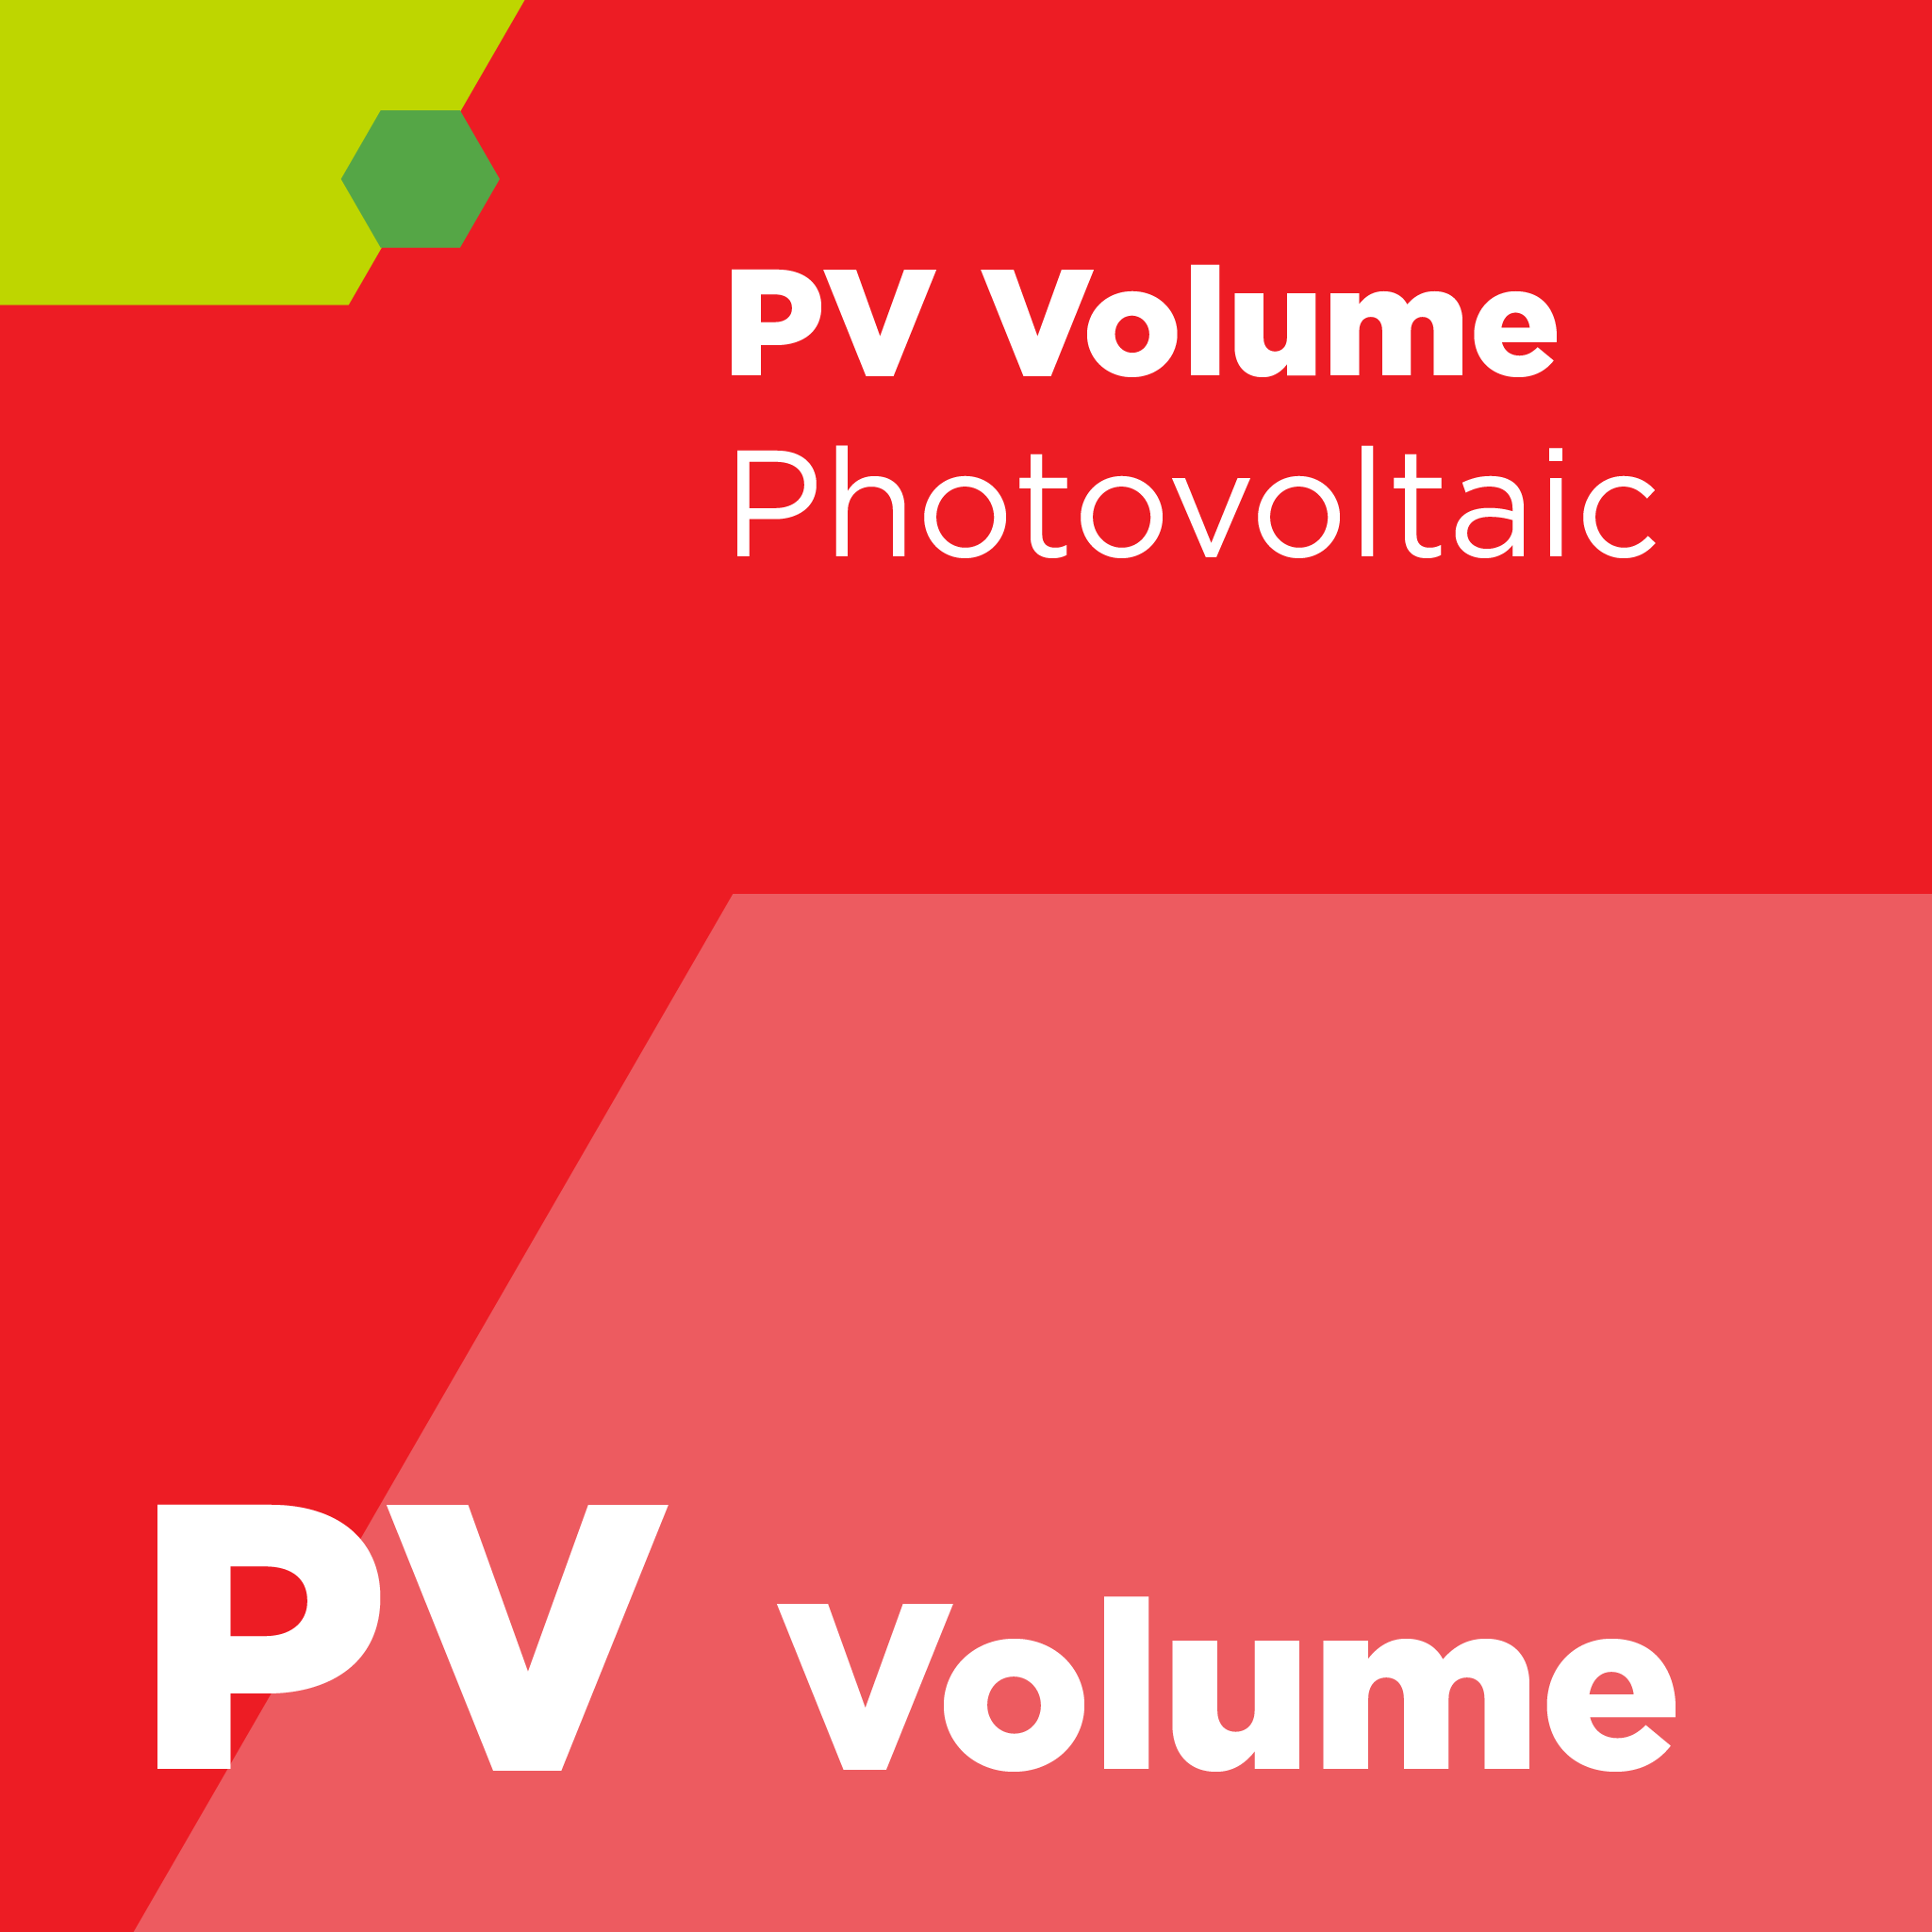 PV01500 - SEMI PV15 - 太陽電池材料の表面ラフネスおよびテクスチャをモニタするための角度分解光散乱測定条件の定義に関するガイド